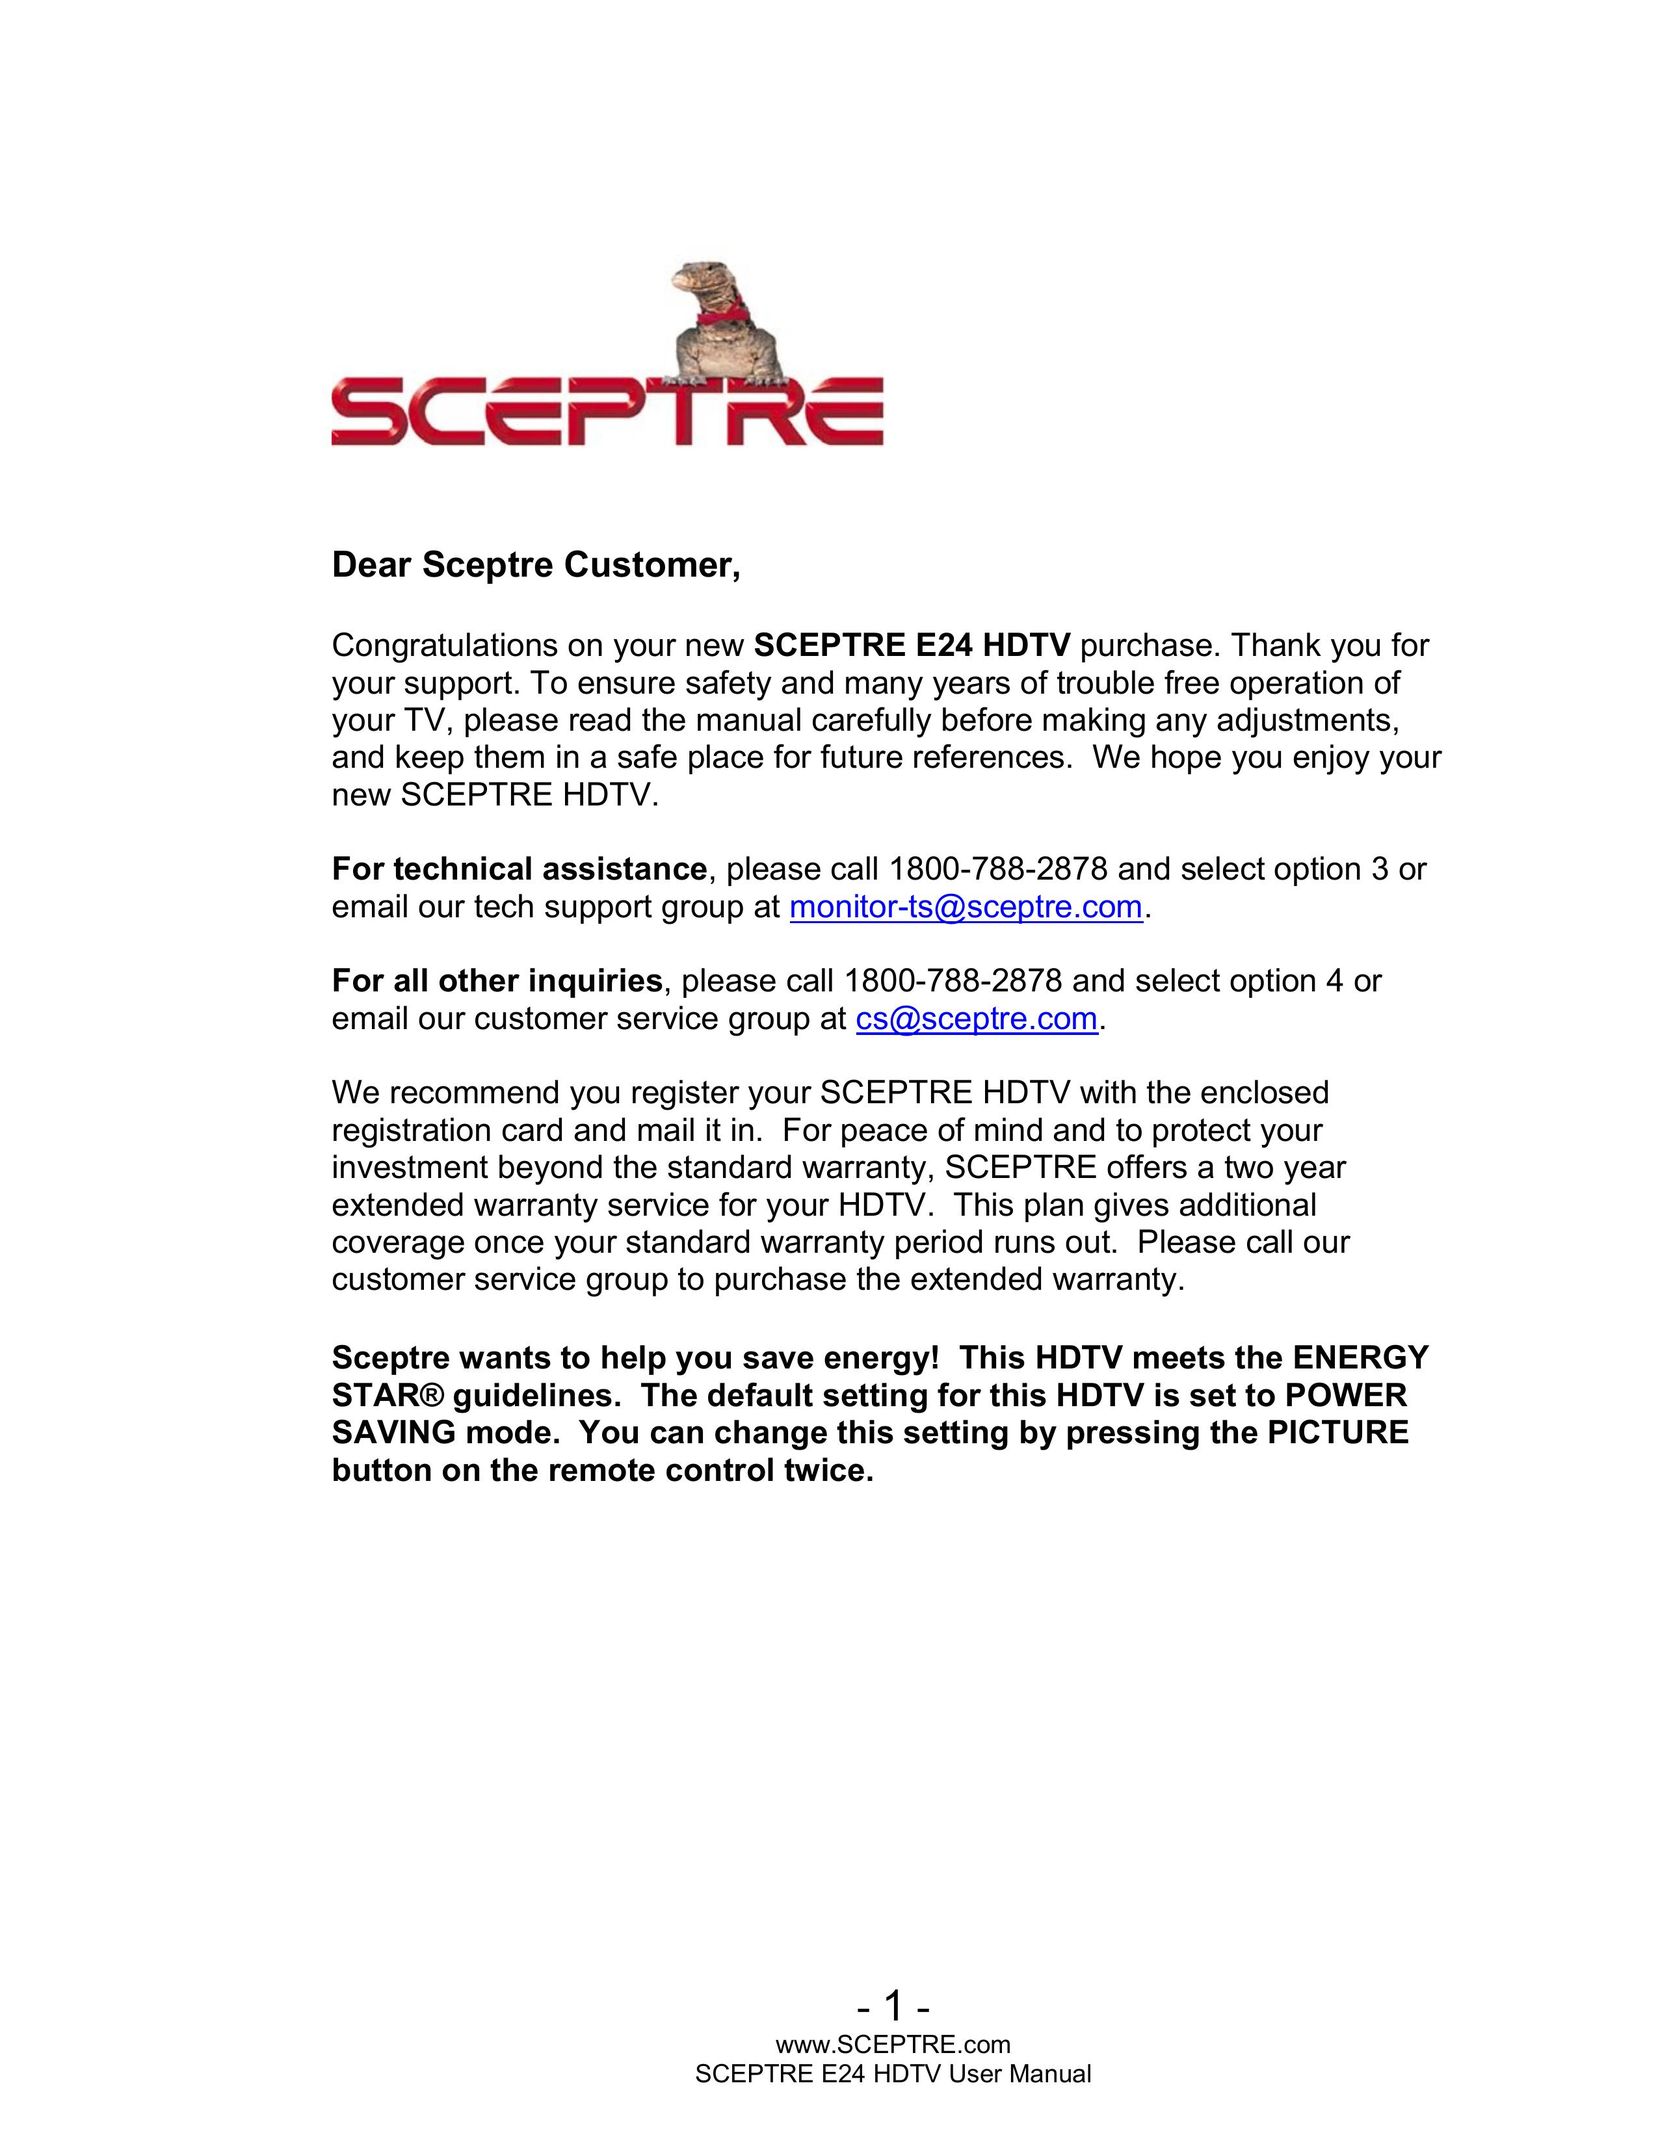 Sceptre Technologies HDTV TV Antenna User Manual